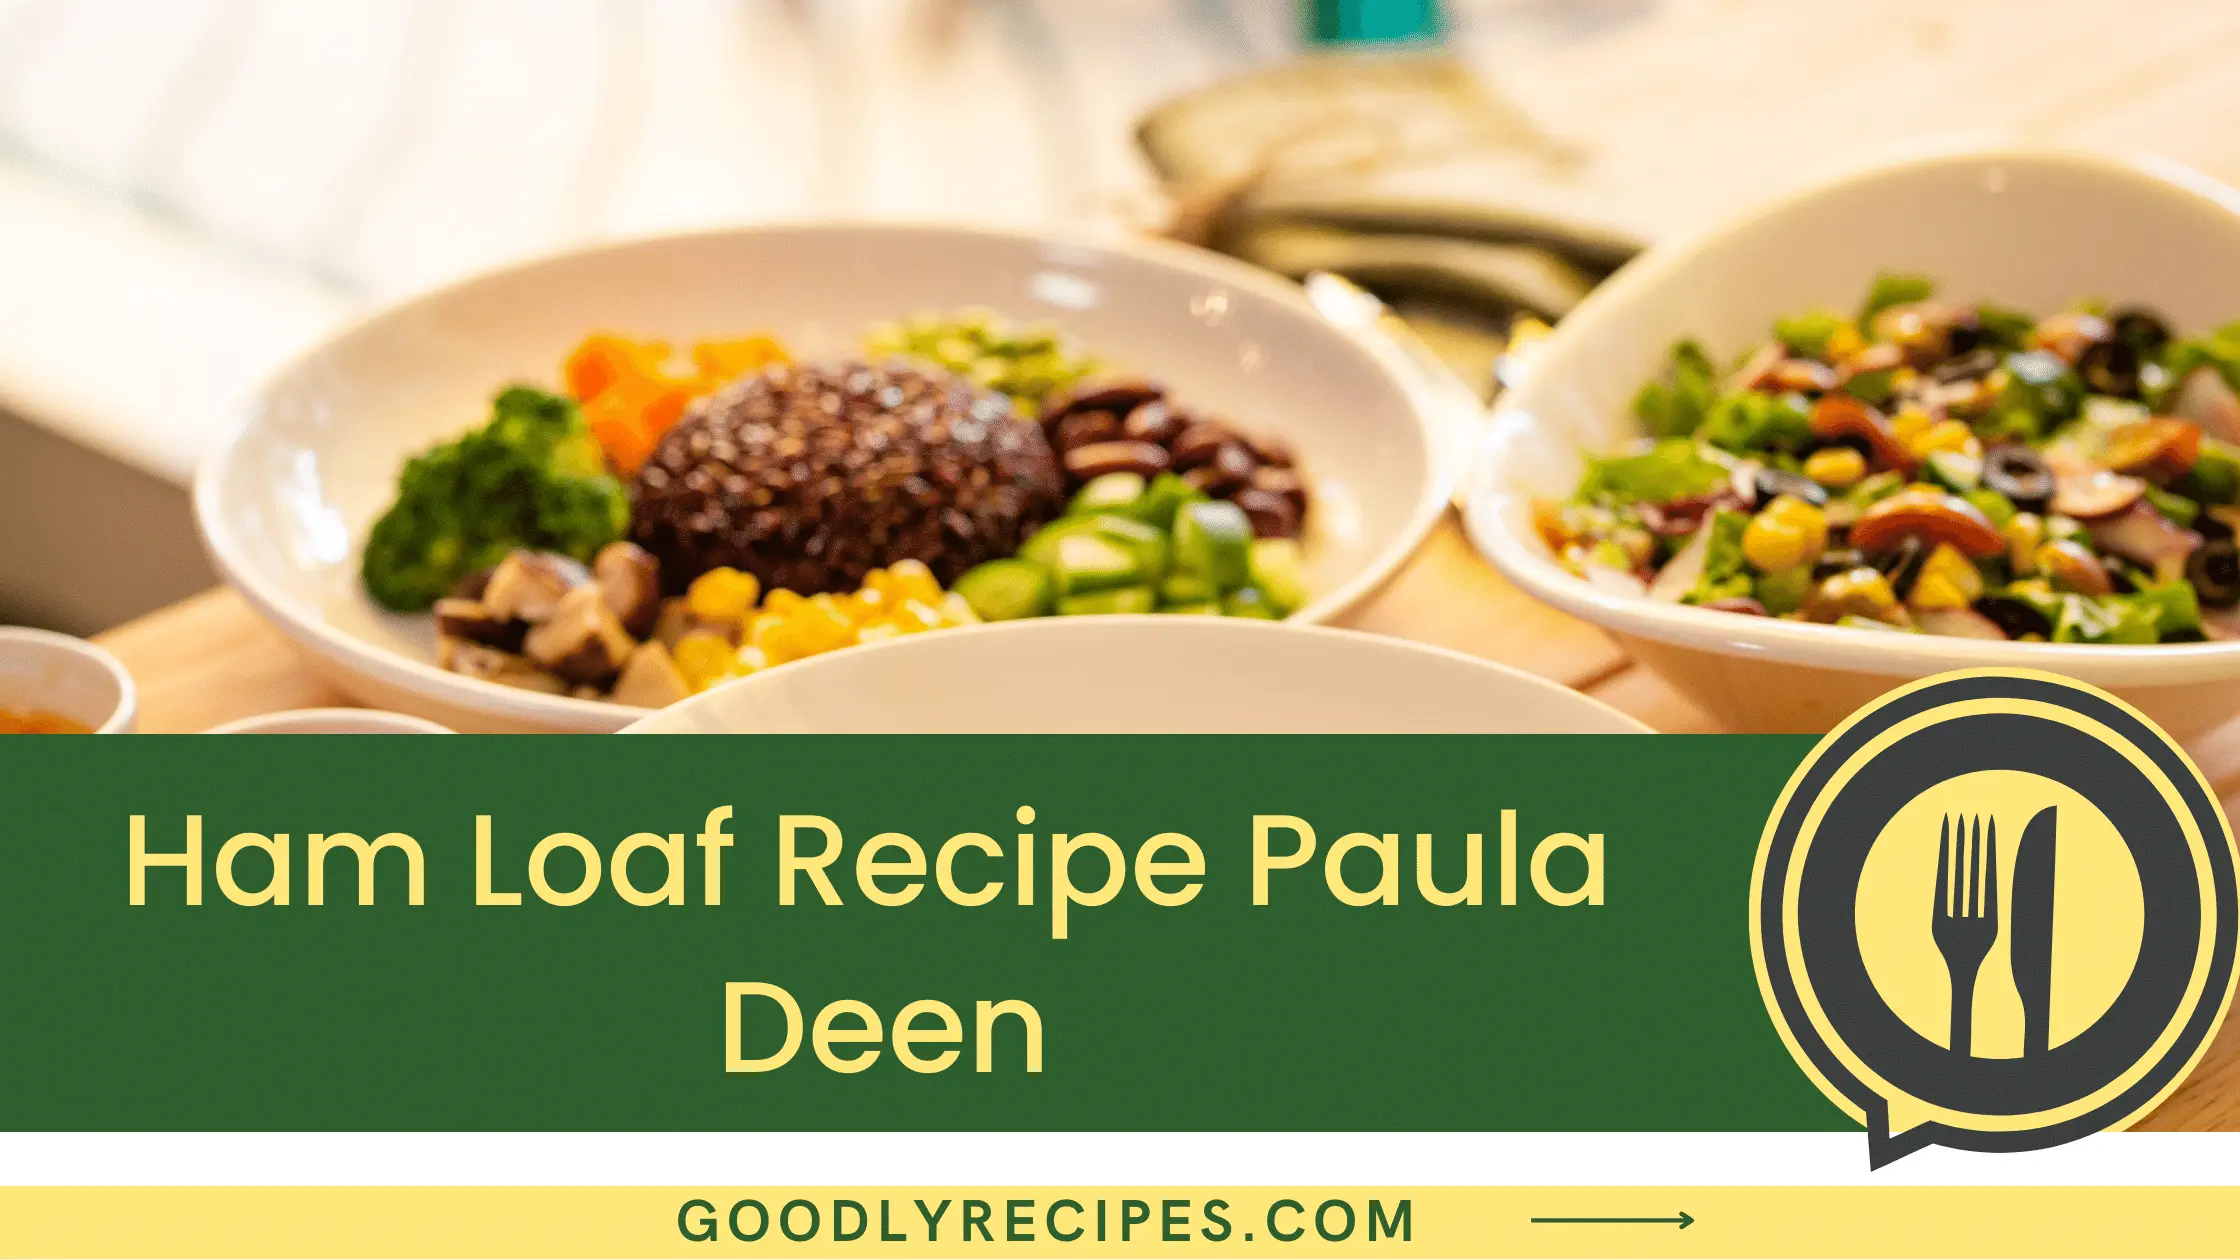 What is Ham Loaf Paula Deen?